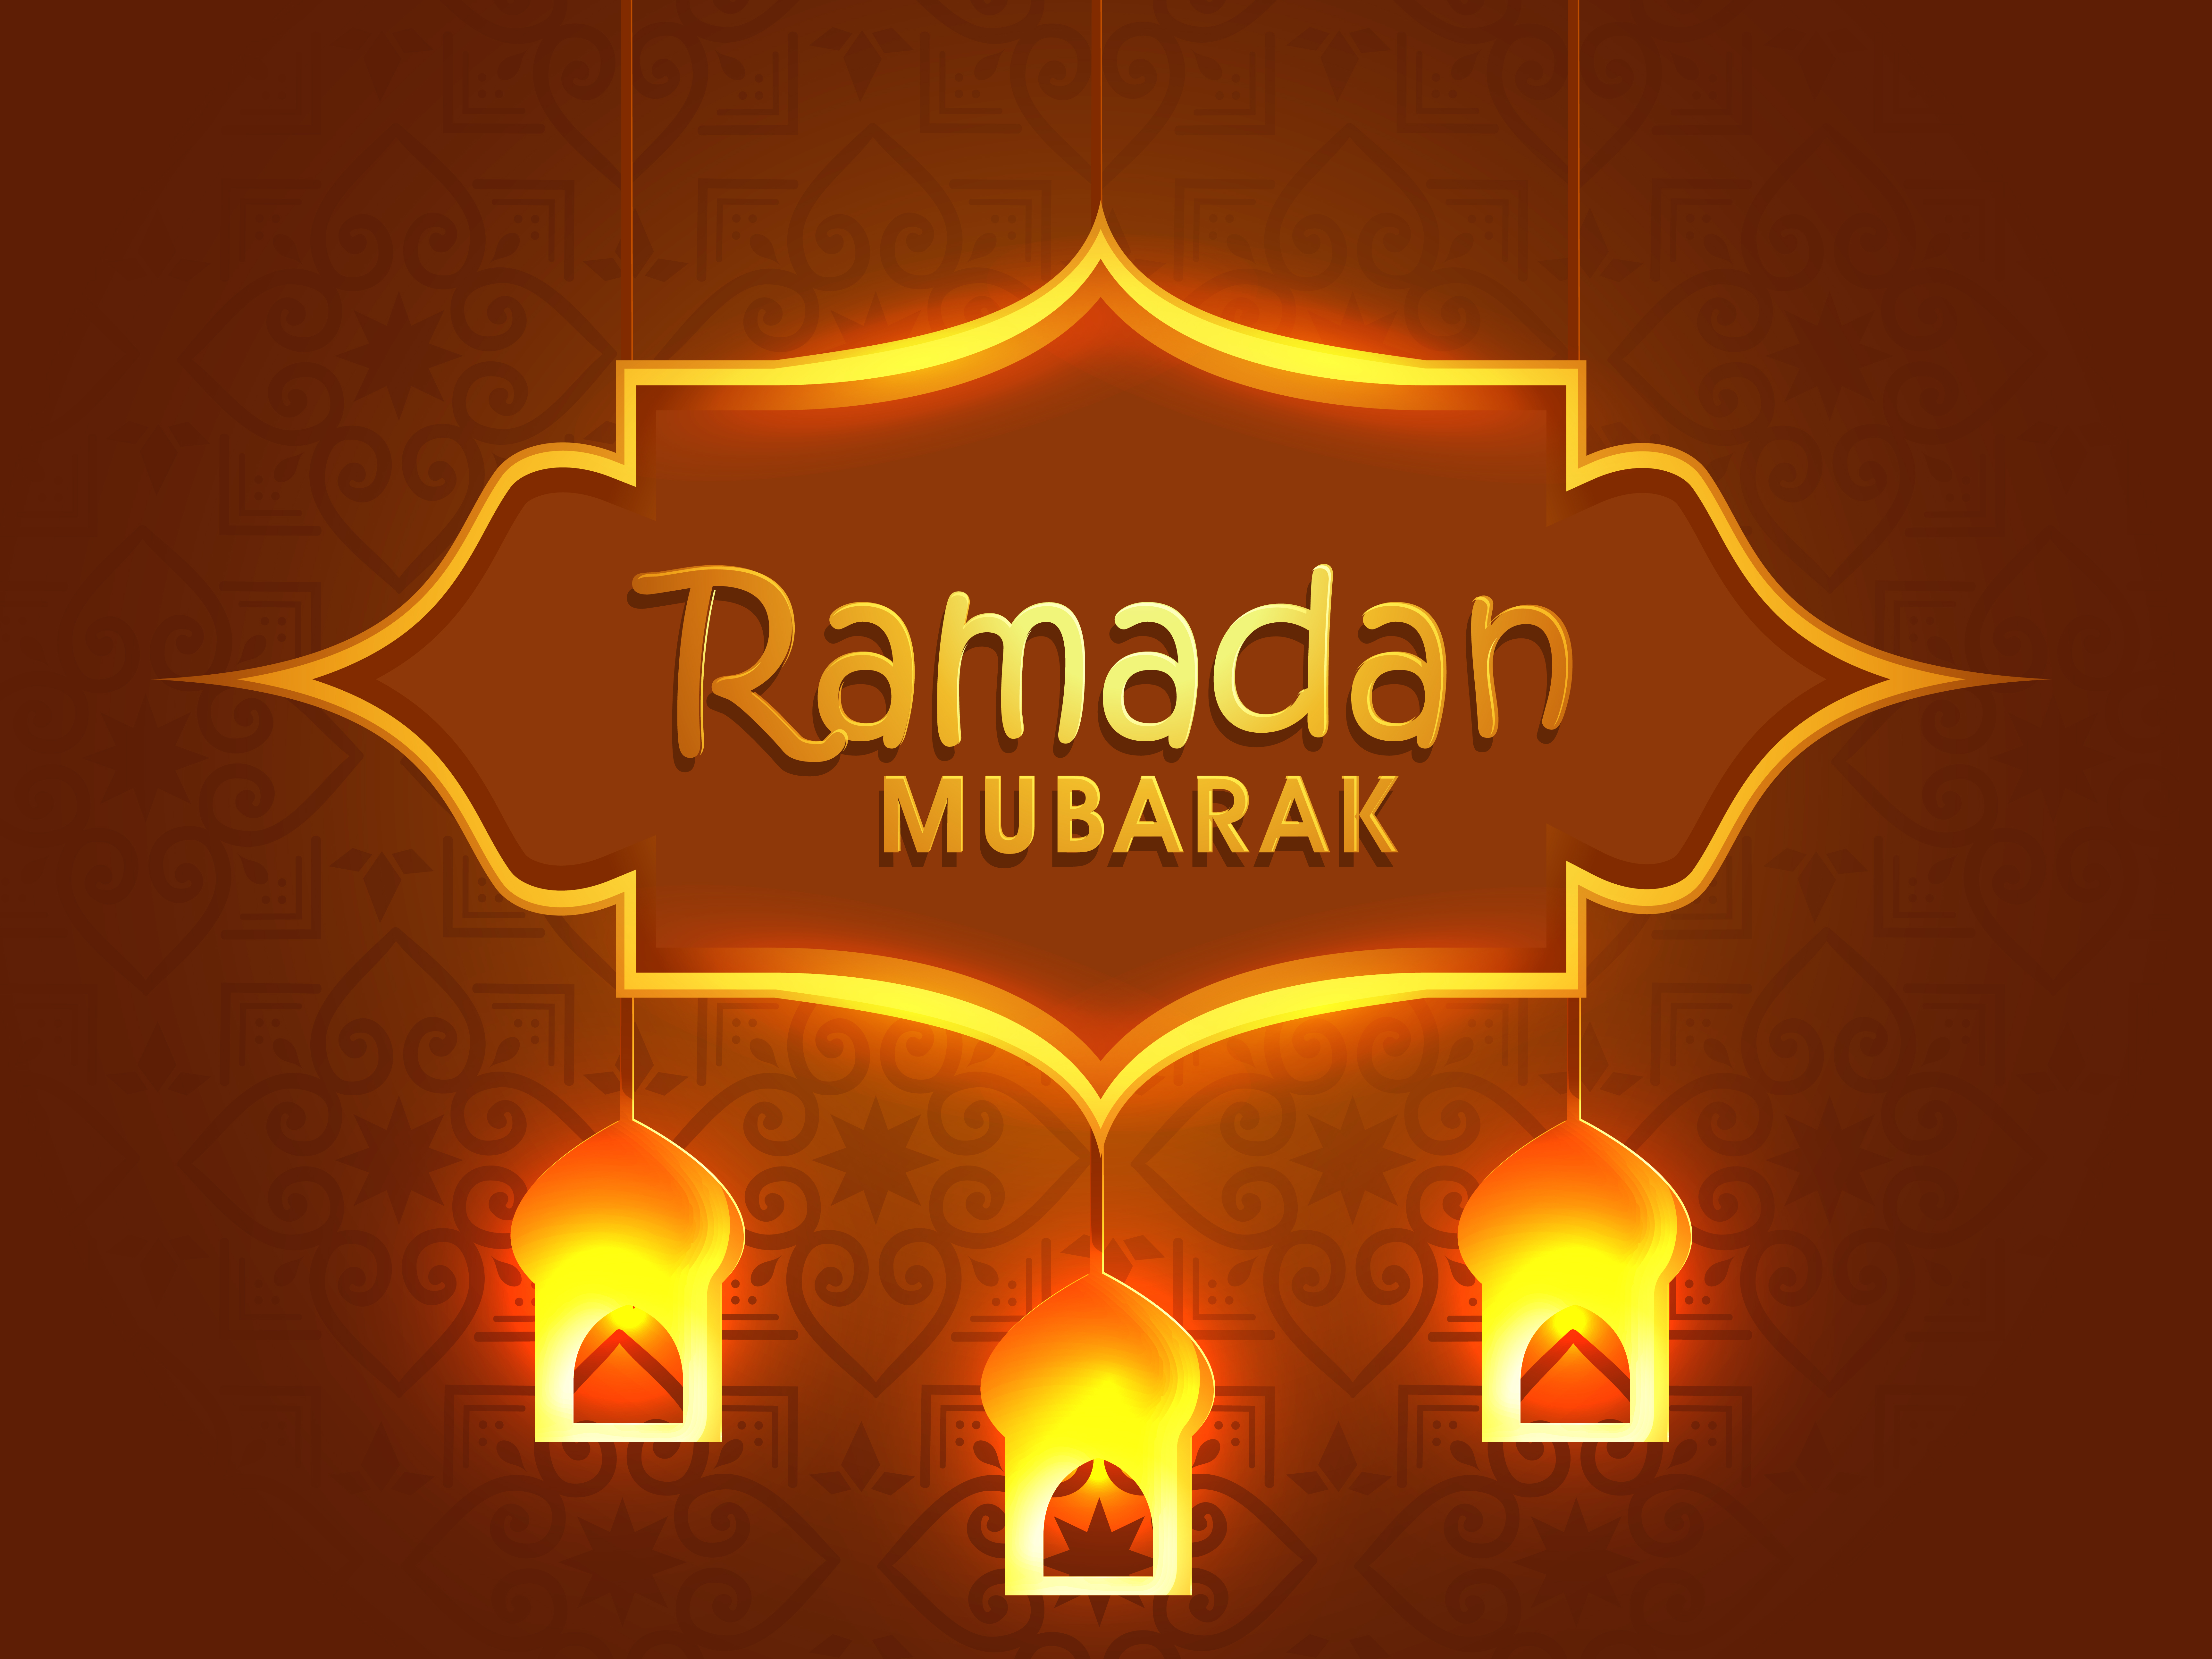 Greeting card design for Ramadan Mubarak. - Download Free Vectors, Clipart Graphics & Vector Art